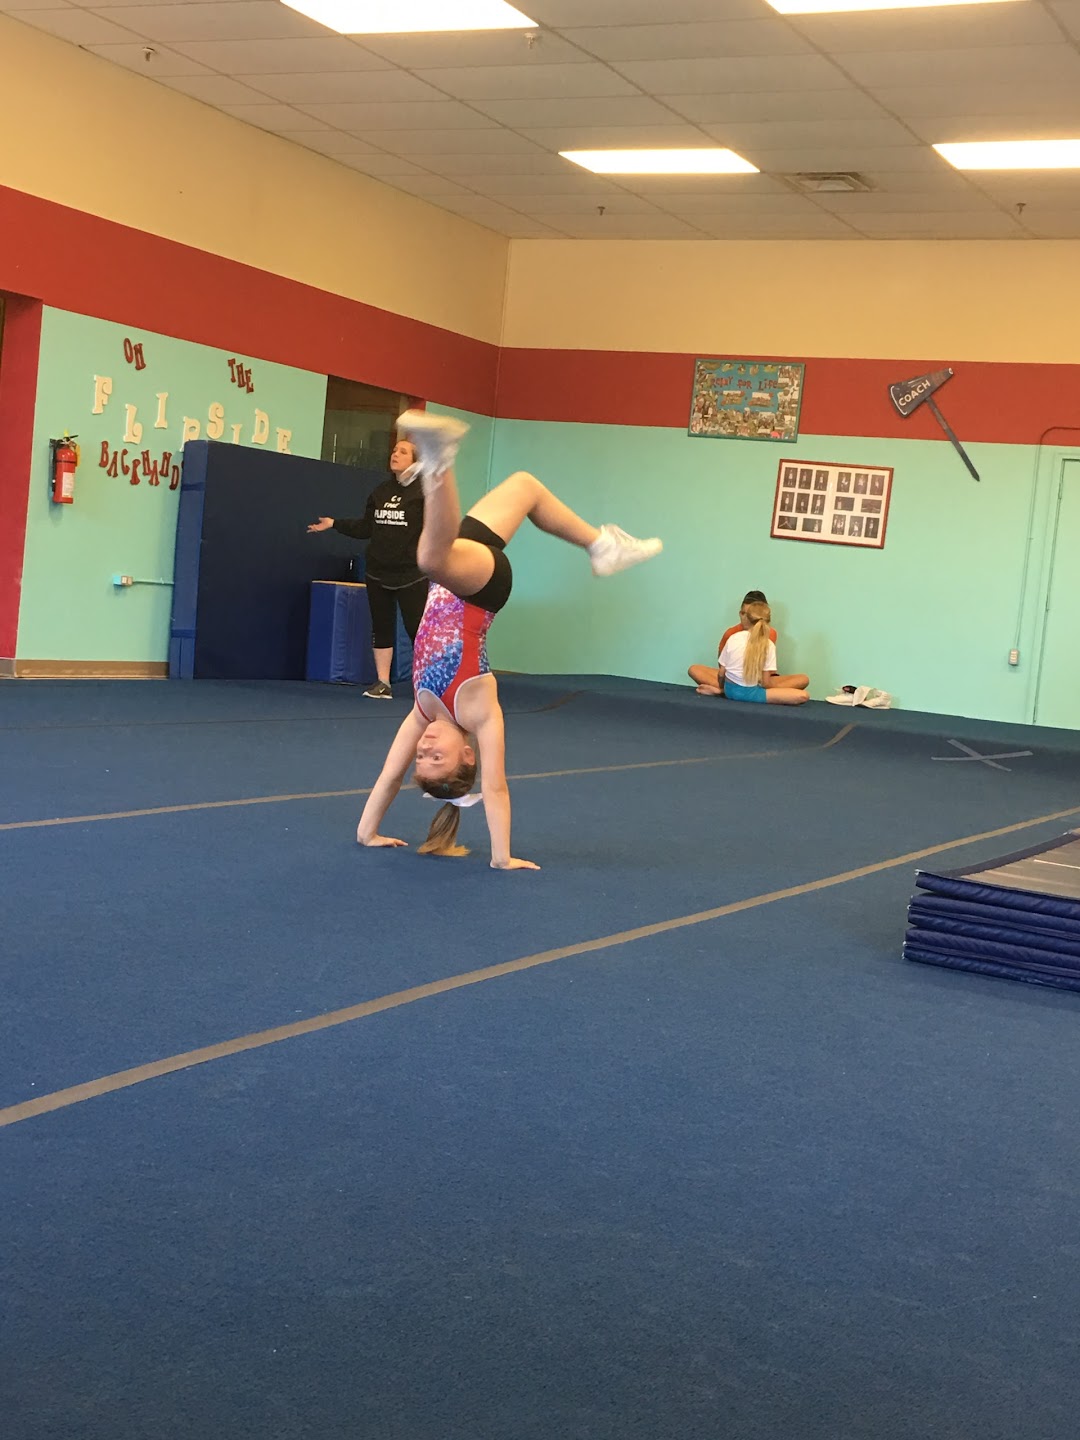 On the Flipside Gymnastics